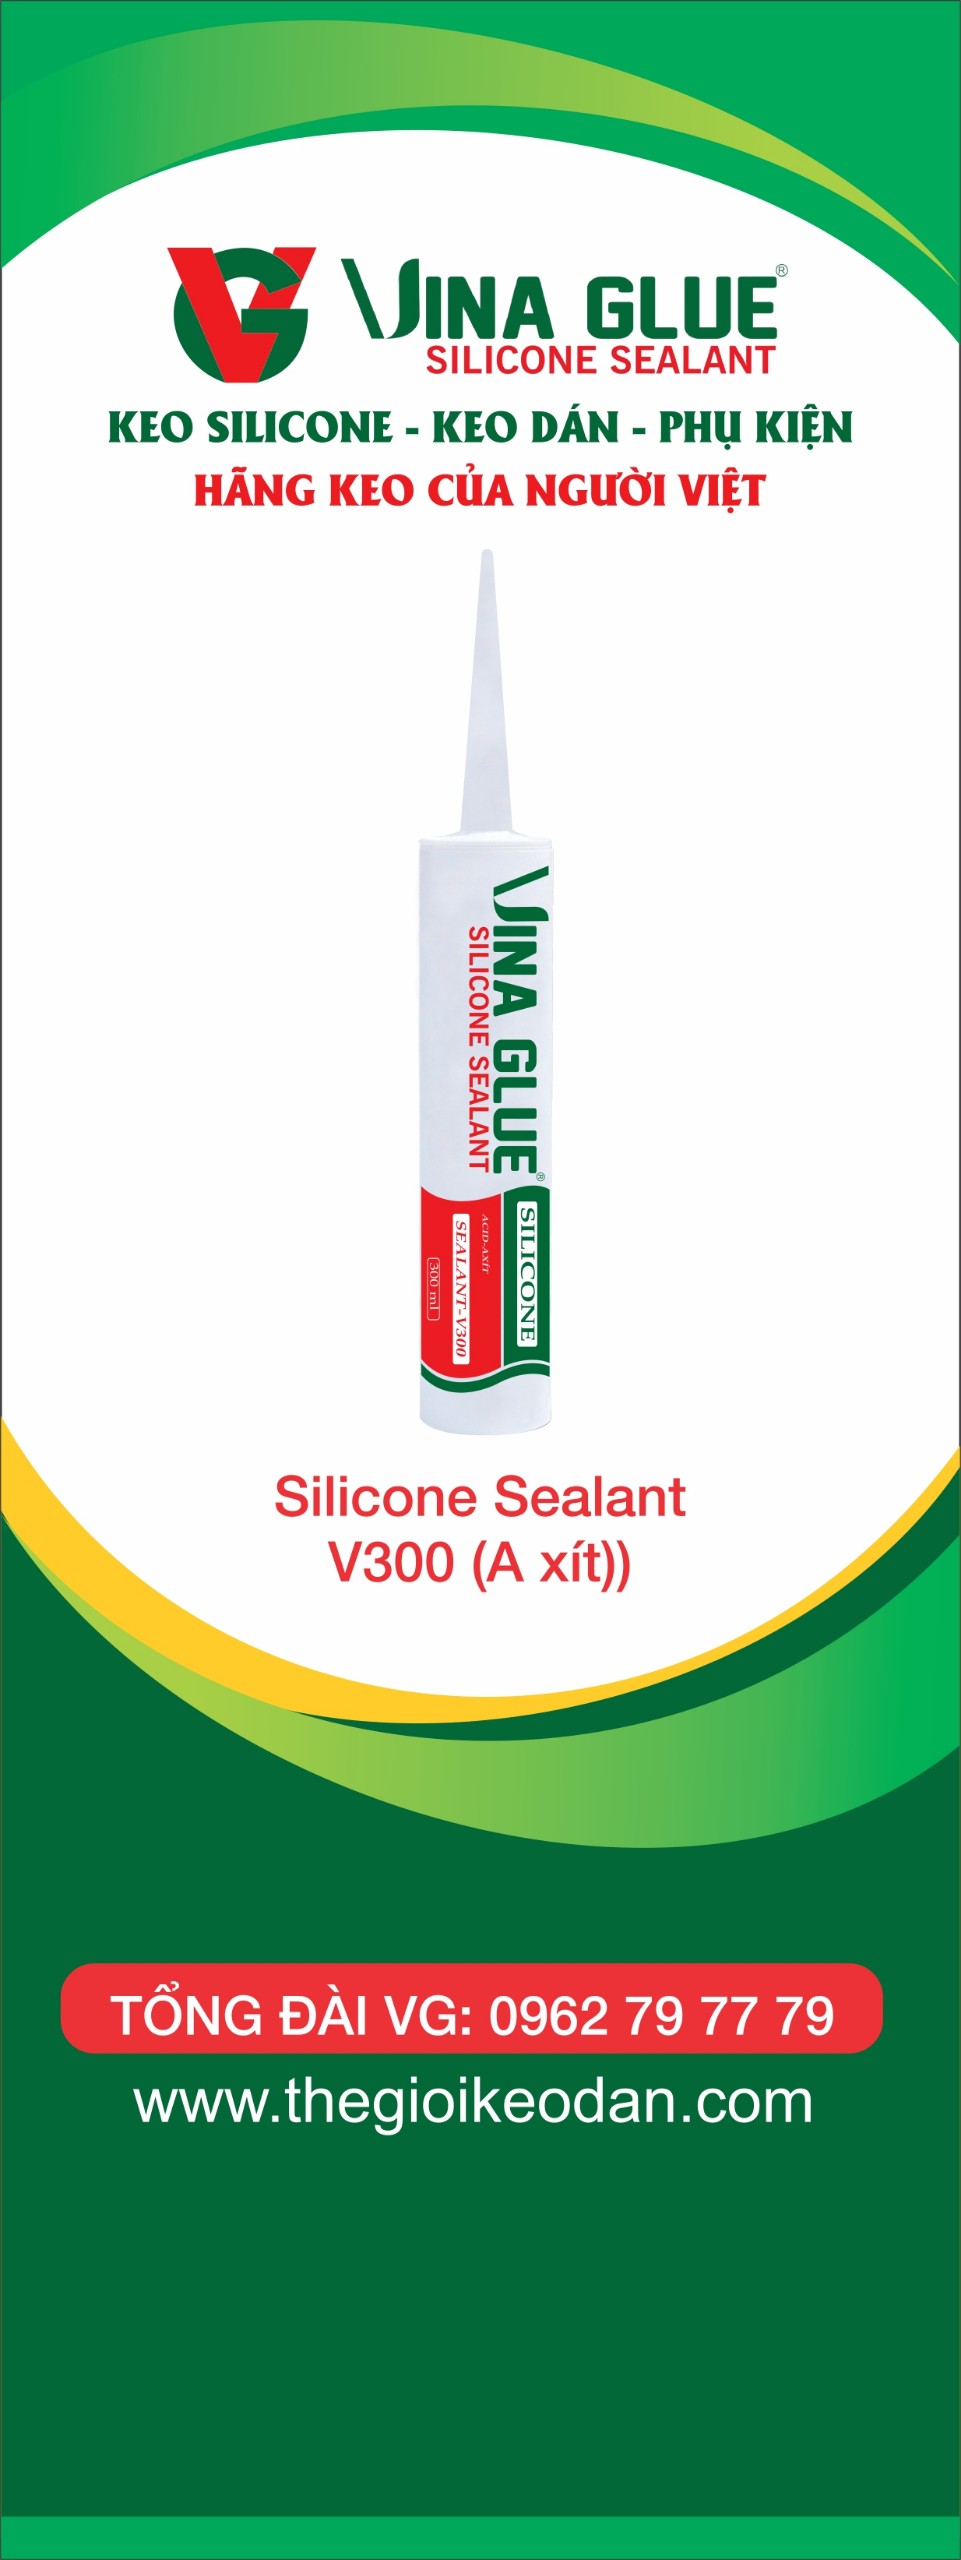 Silicone Sealant V300(A xít) - Keo Silicone VINA GLUE